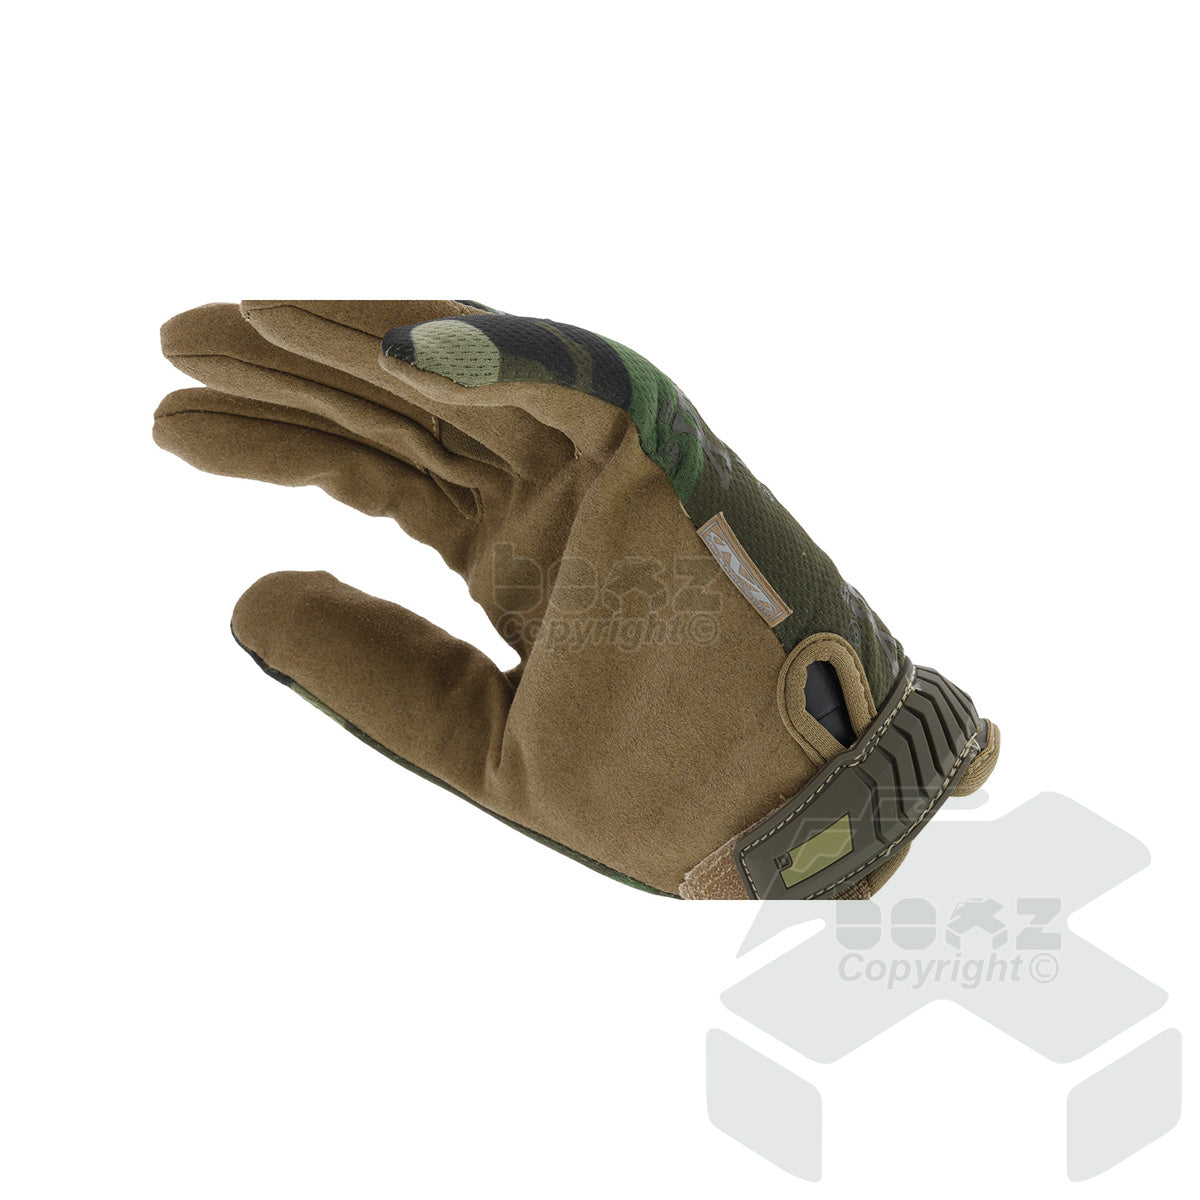 Mechanix The Original Gloves - M81 Woodland